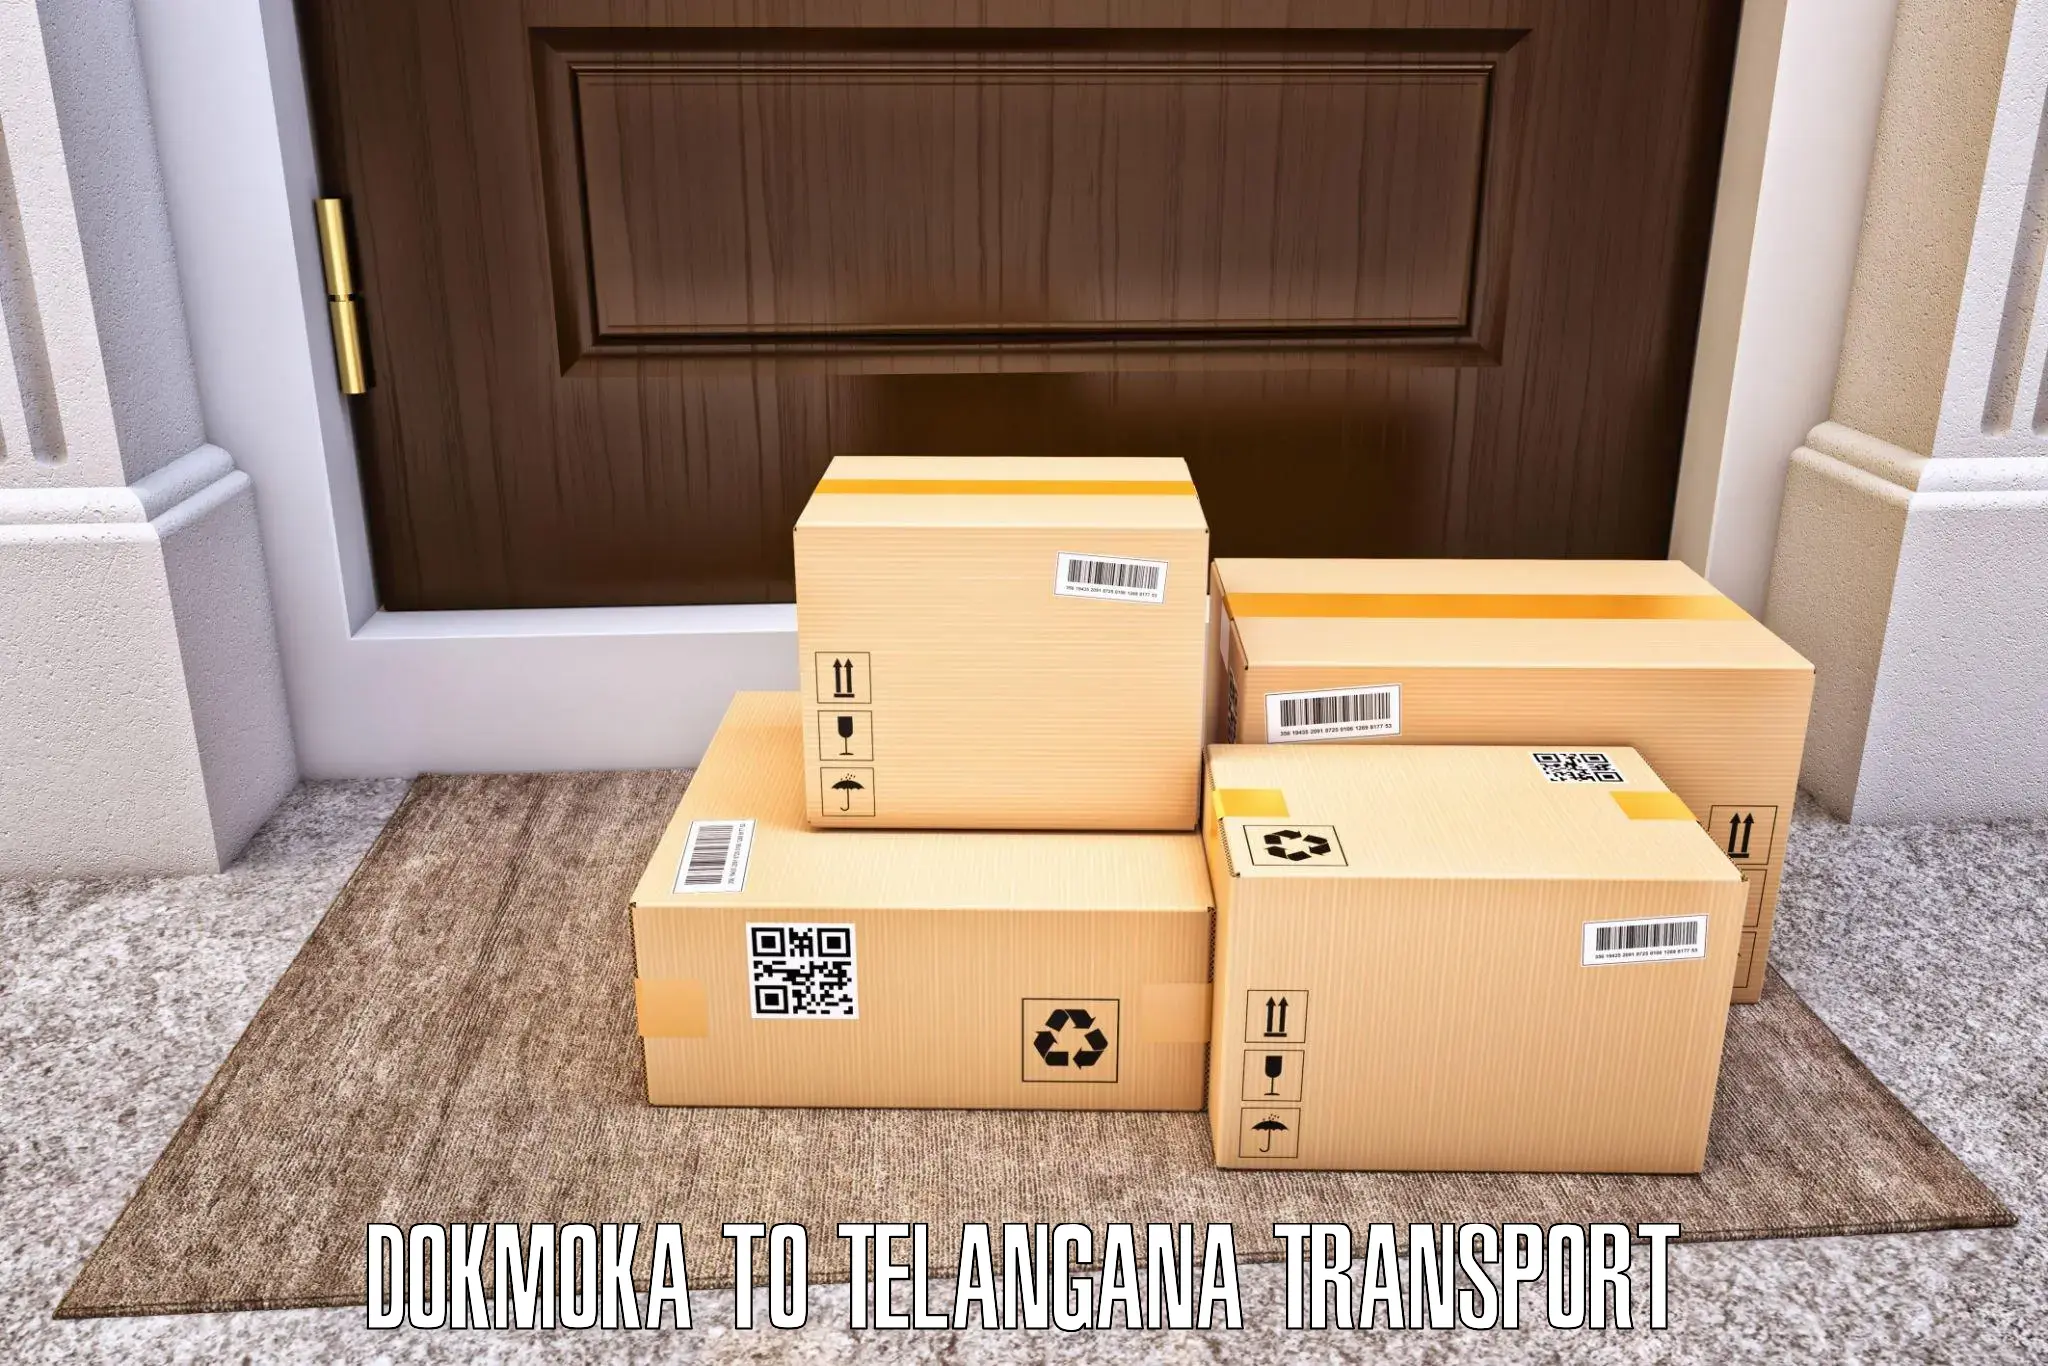 Shipping partner in Dokmoka to Tadvai